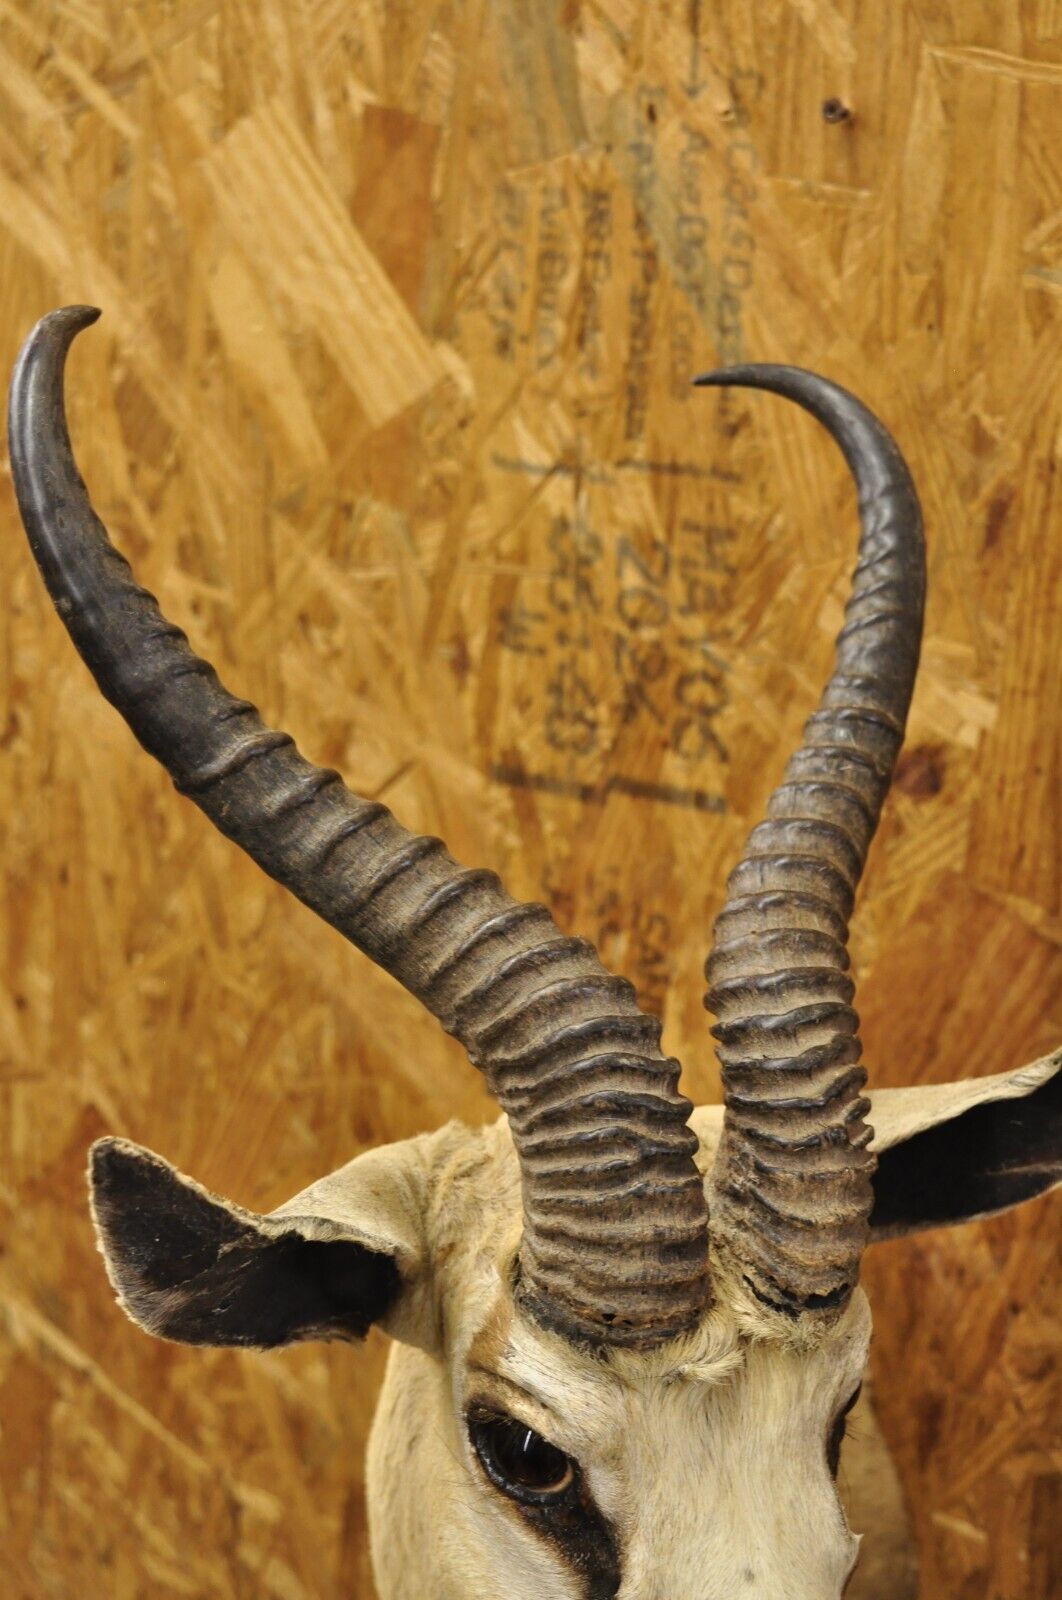 Vintage Cape Springbok Shoulder Mount Taxidermy 12" Horn Antlers Wall Decor